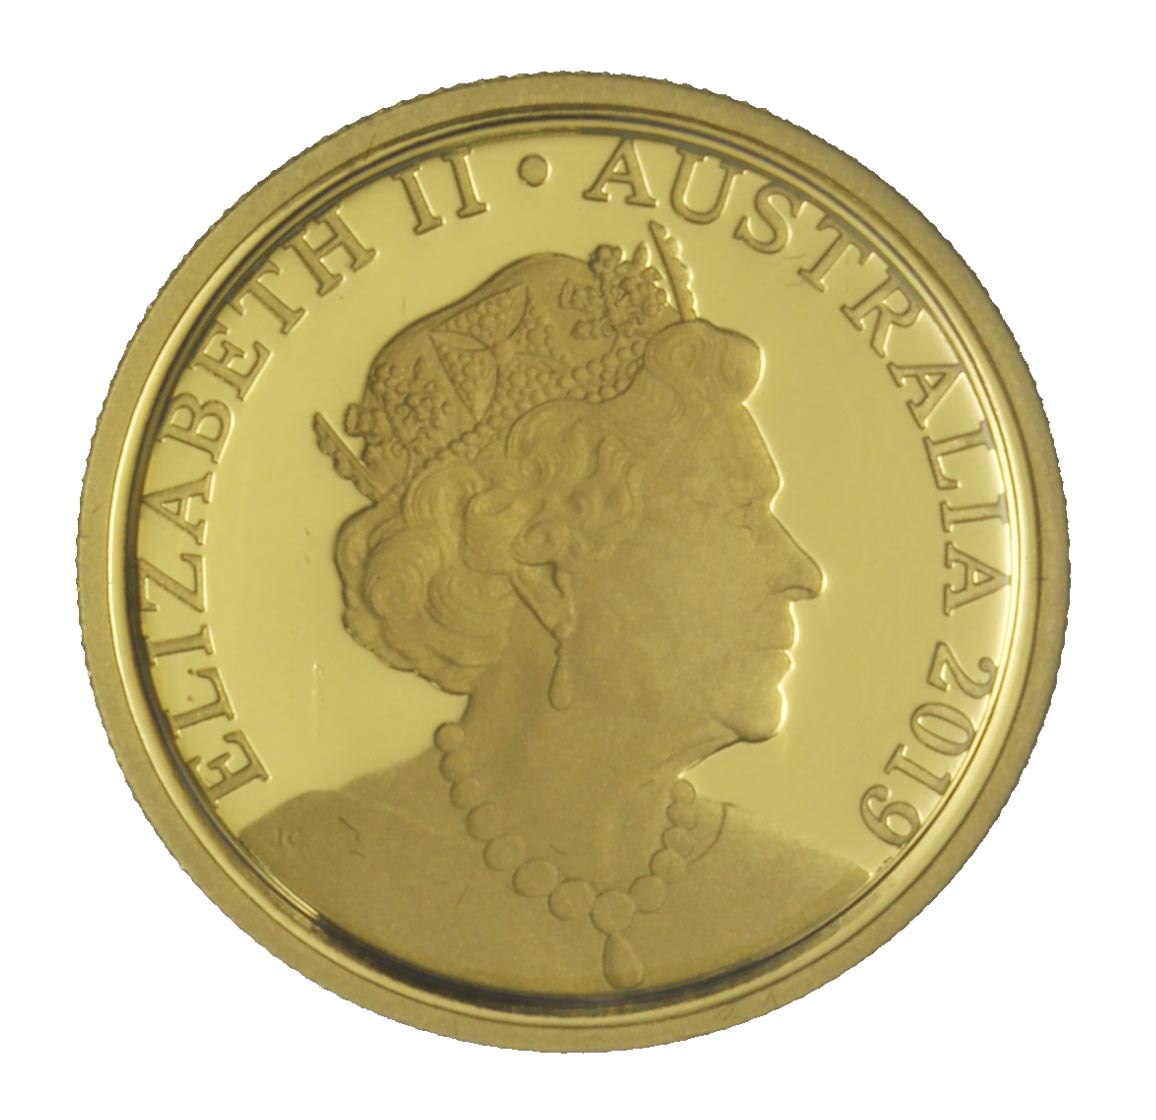 17441_480_1-Australia-2019-25-dollari-oro nuova effigie regina Elisabetta.jpg